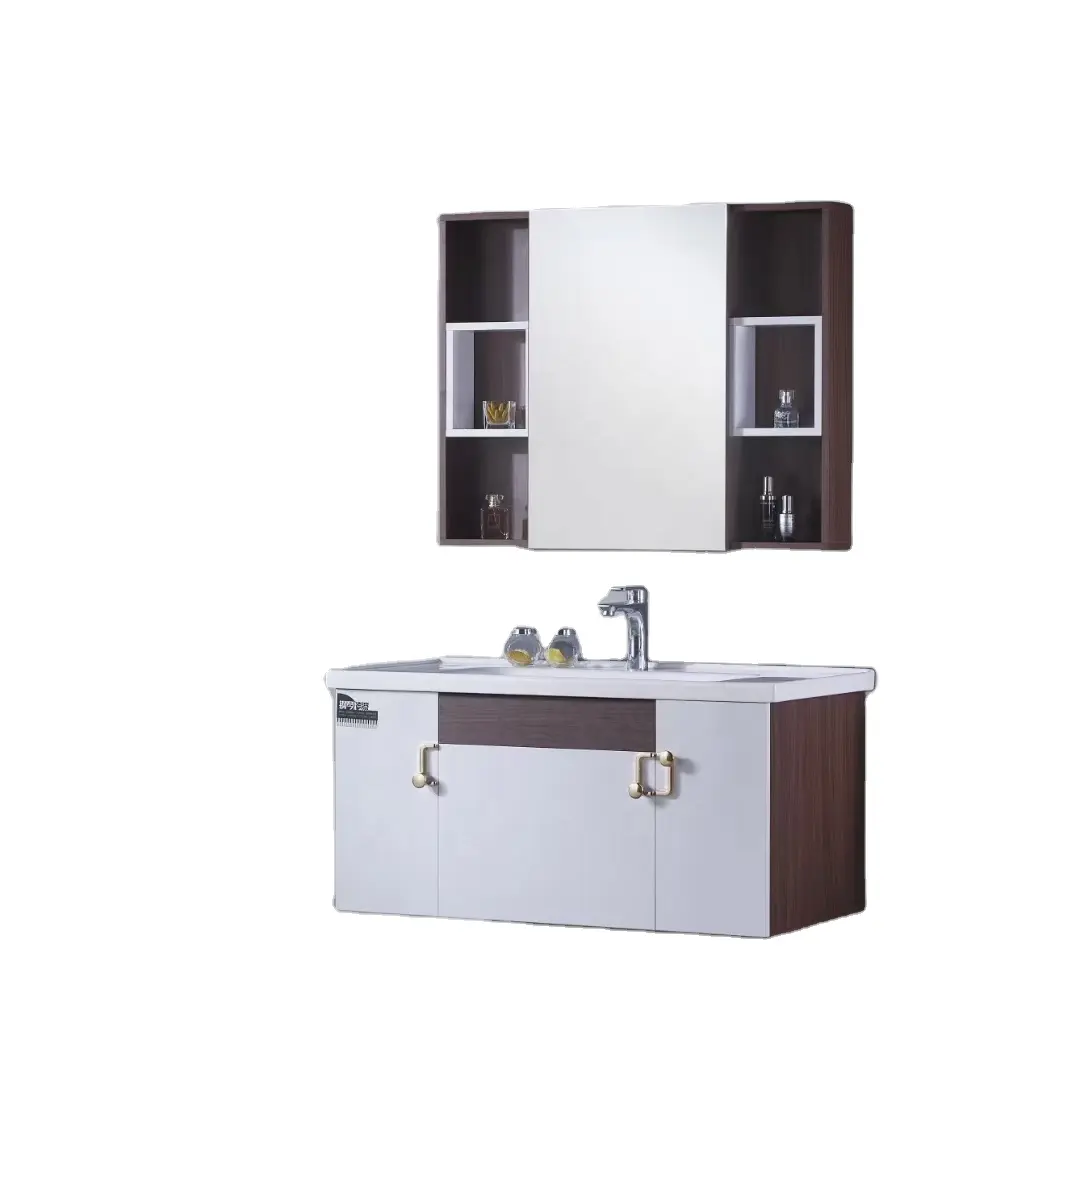 Chinese Style Washroom Countertop Sink Toilet Unit Basin Wood Bathroom Furniture Bathroom Vanity Cabinets Buy Bathroom Vanity